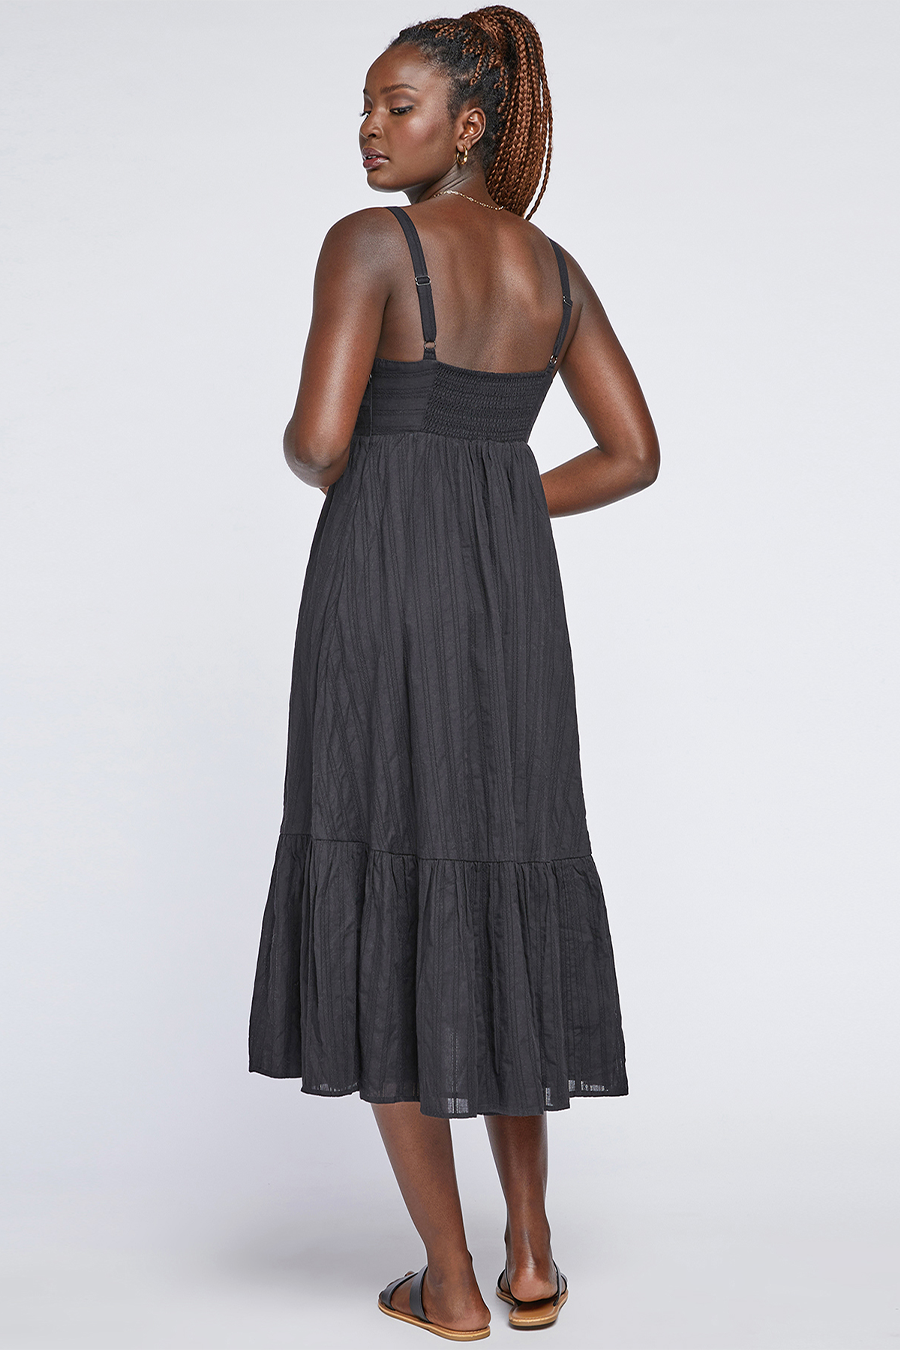 Shae Textured Dress | Black - Main Image Number 2 of 2